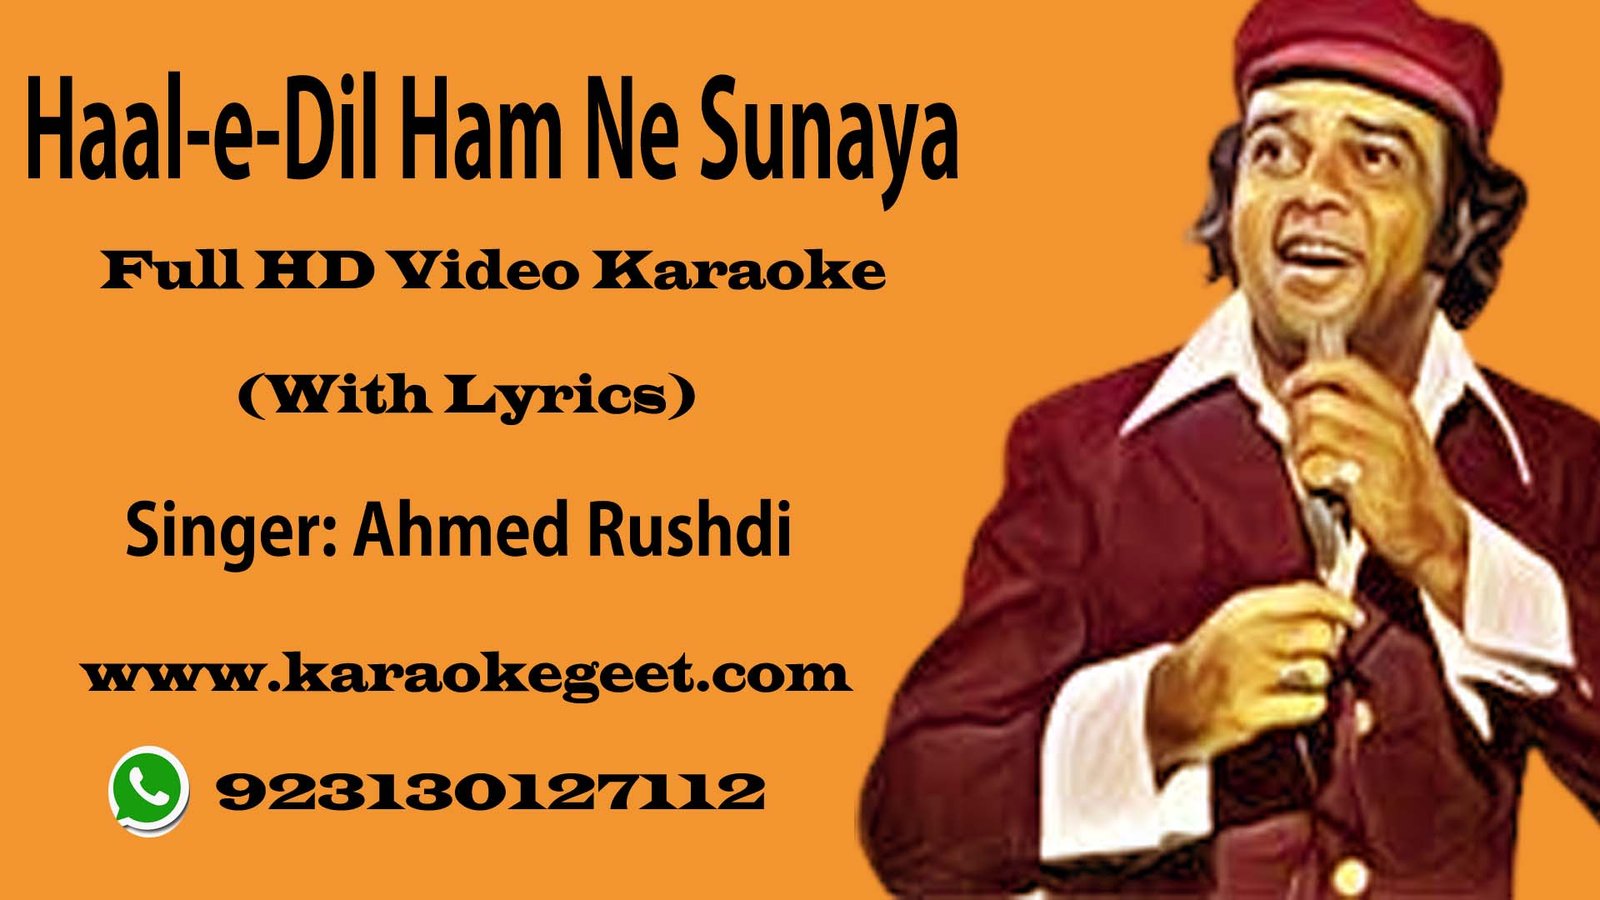 Hal-e-dil hamne sunaya Video Karaoke